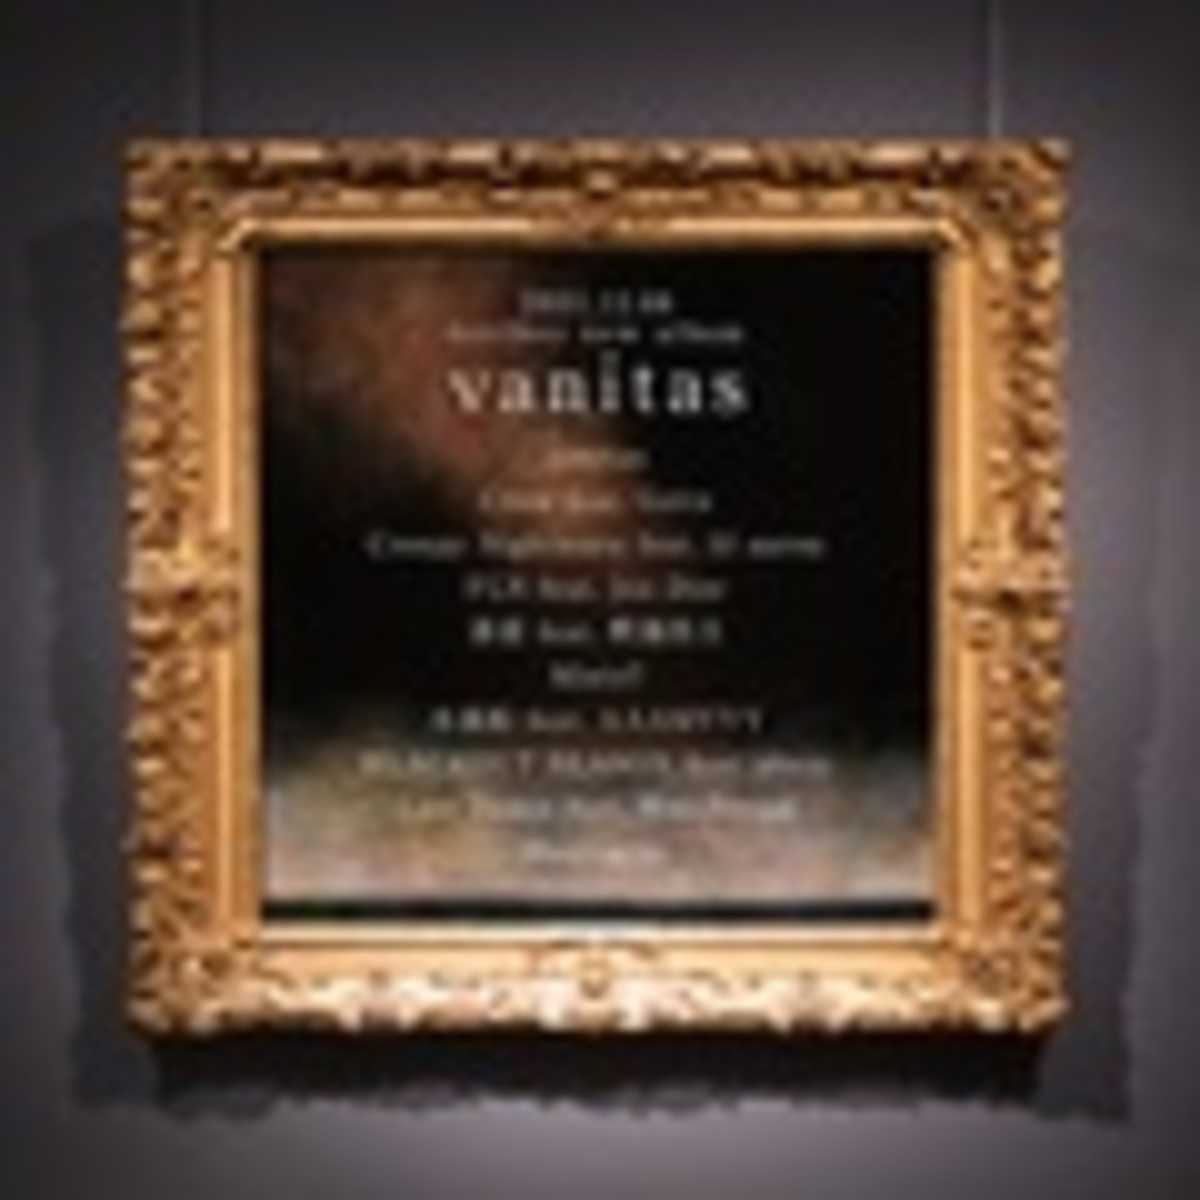 『vanitas』トラックリスト